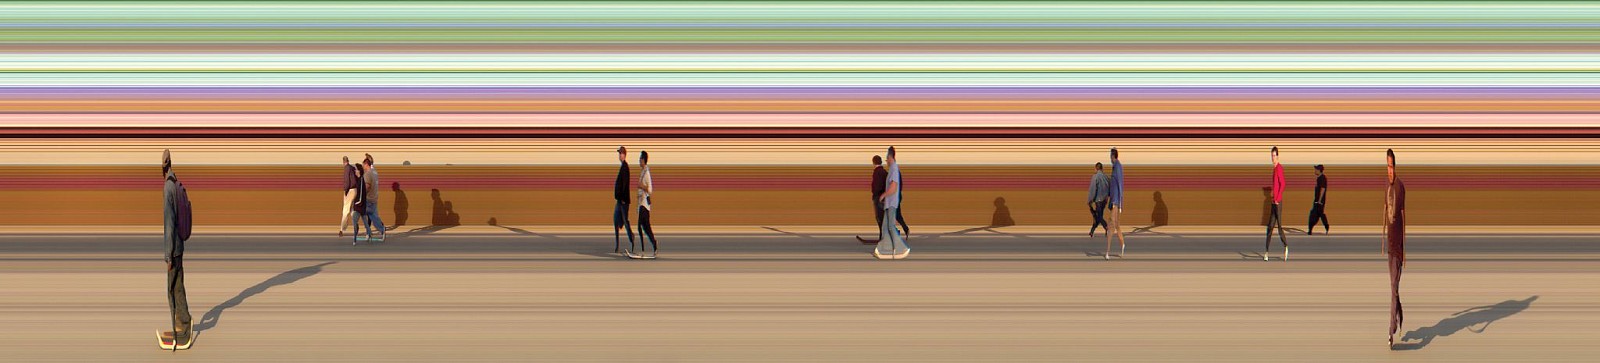 Jay Mark Johnson, VENICE BOARDWALK 10, 2007 Venice Beach CA
archival pigment on paper, mounted on aluminum, 40 x 176 in. (101.6 x 447 cm)